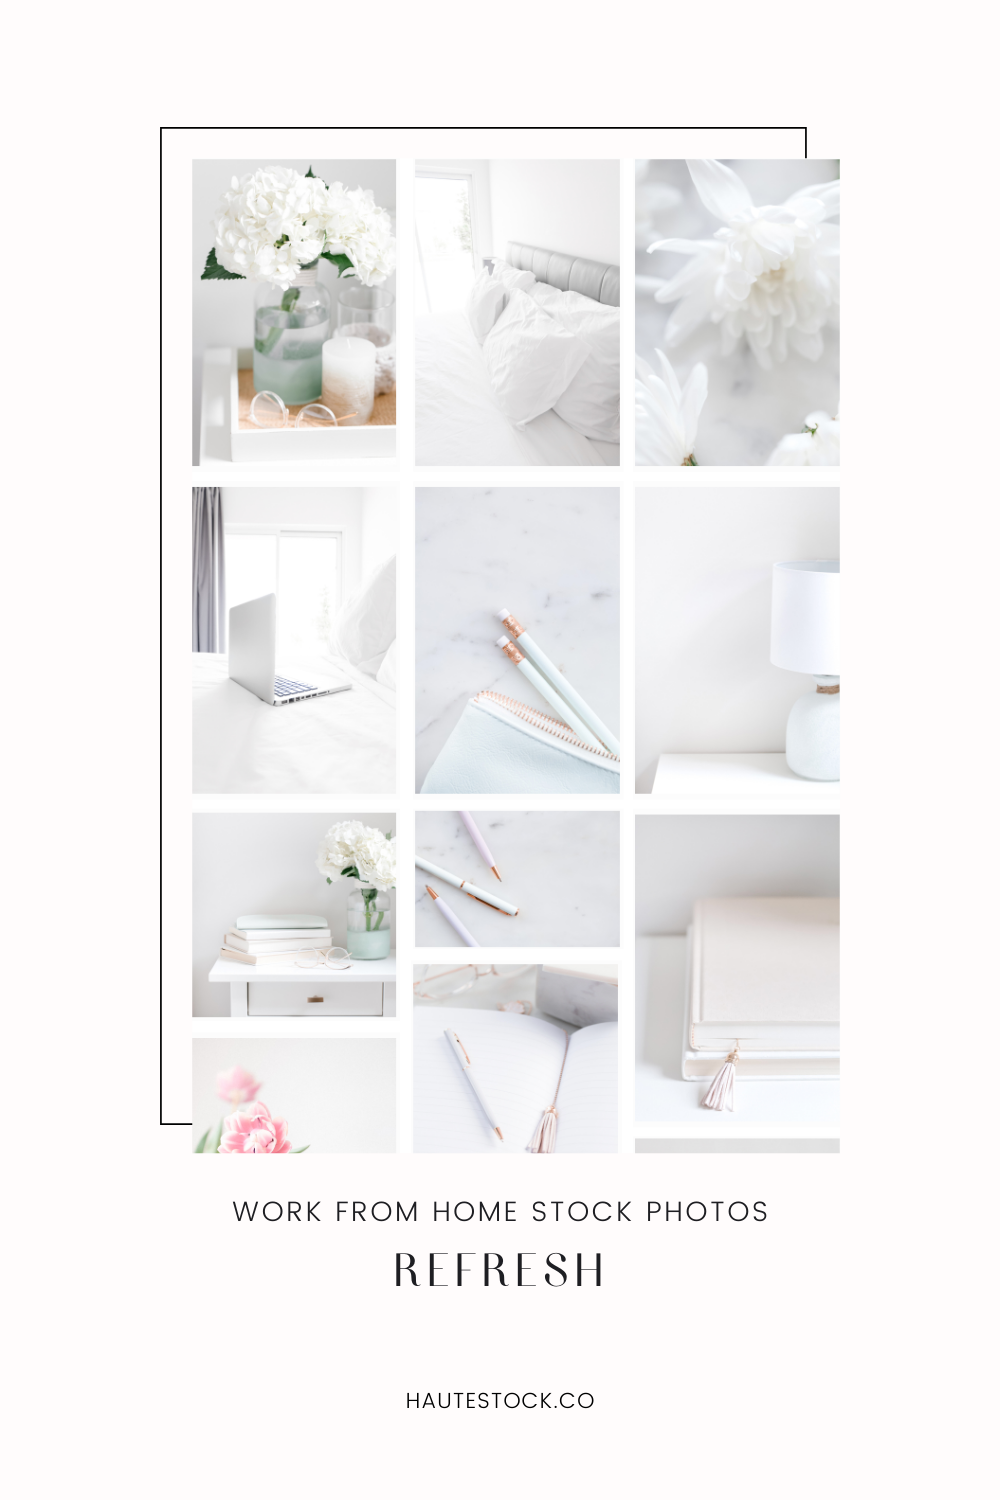 Neutral, light, airy home office stock photos for female entrepreneurs